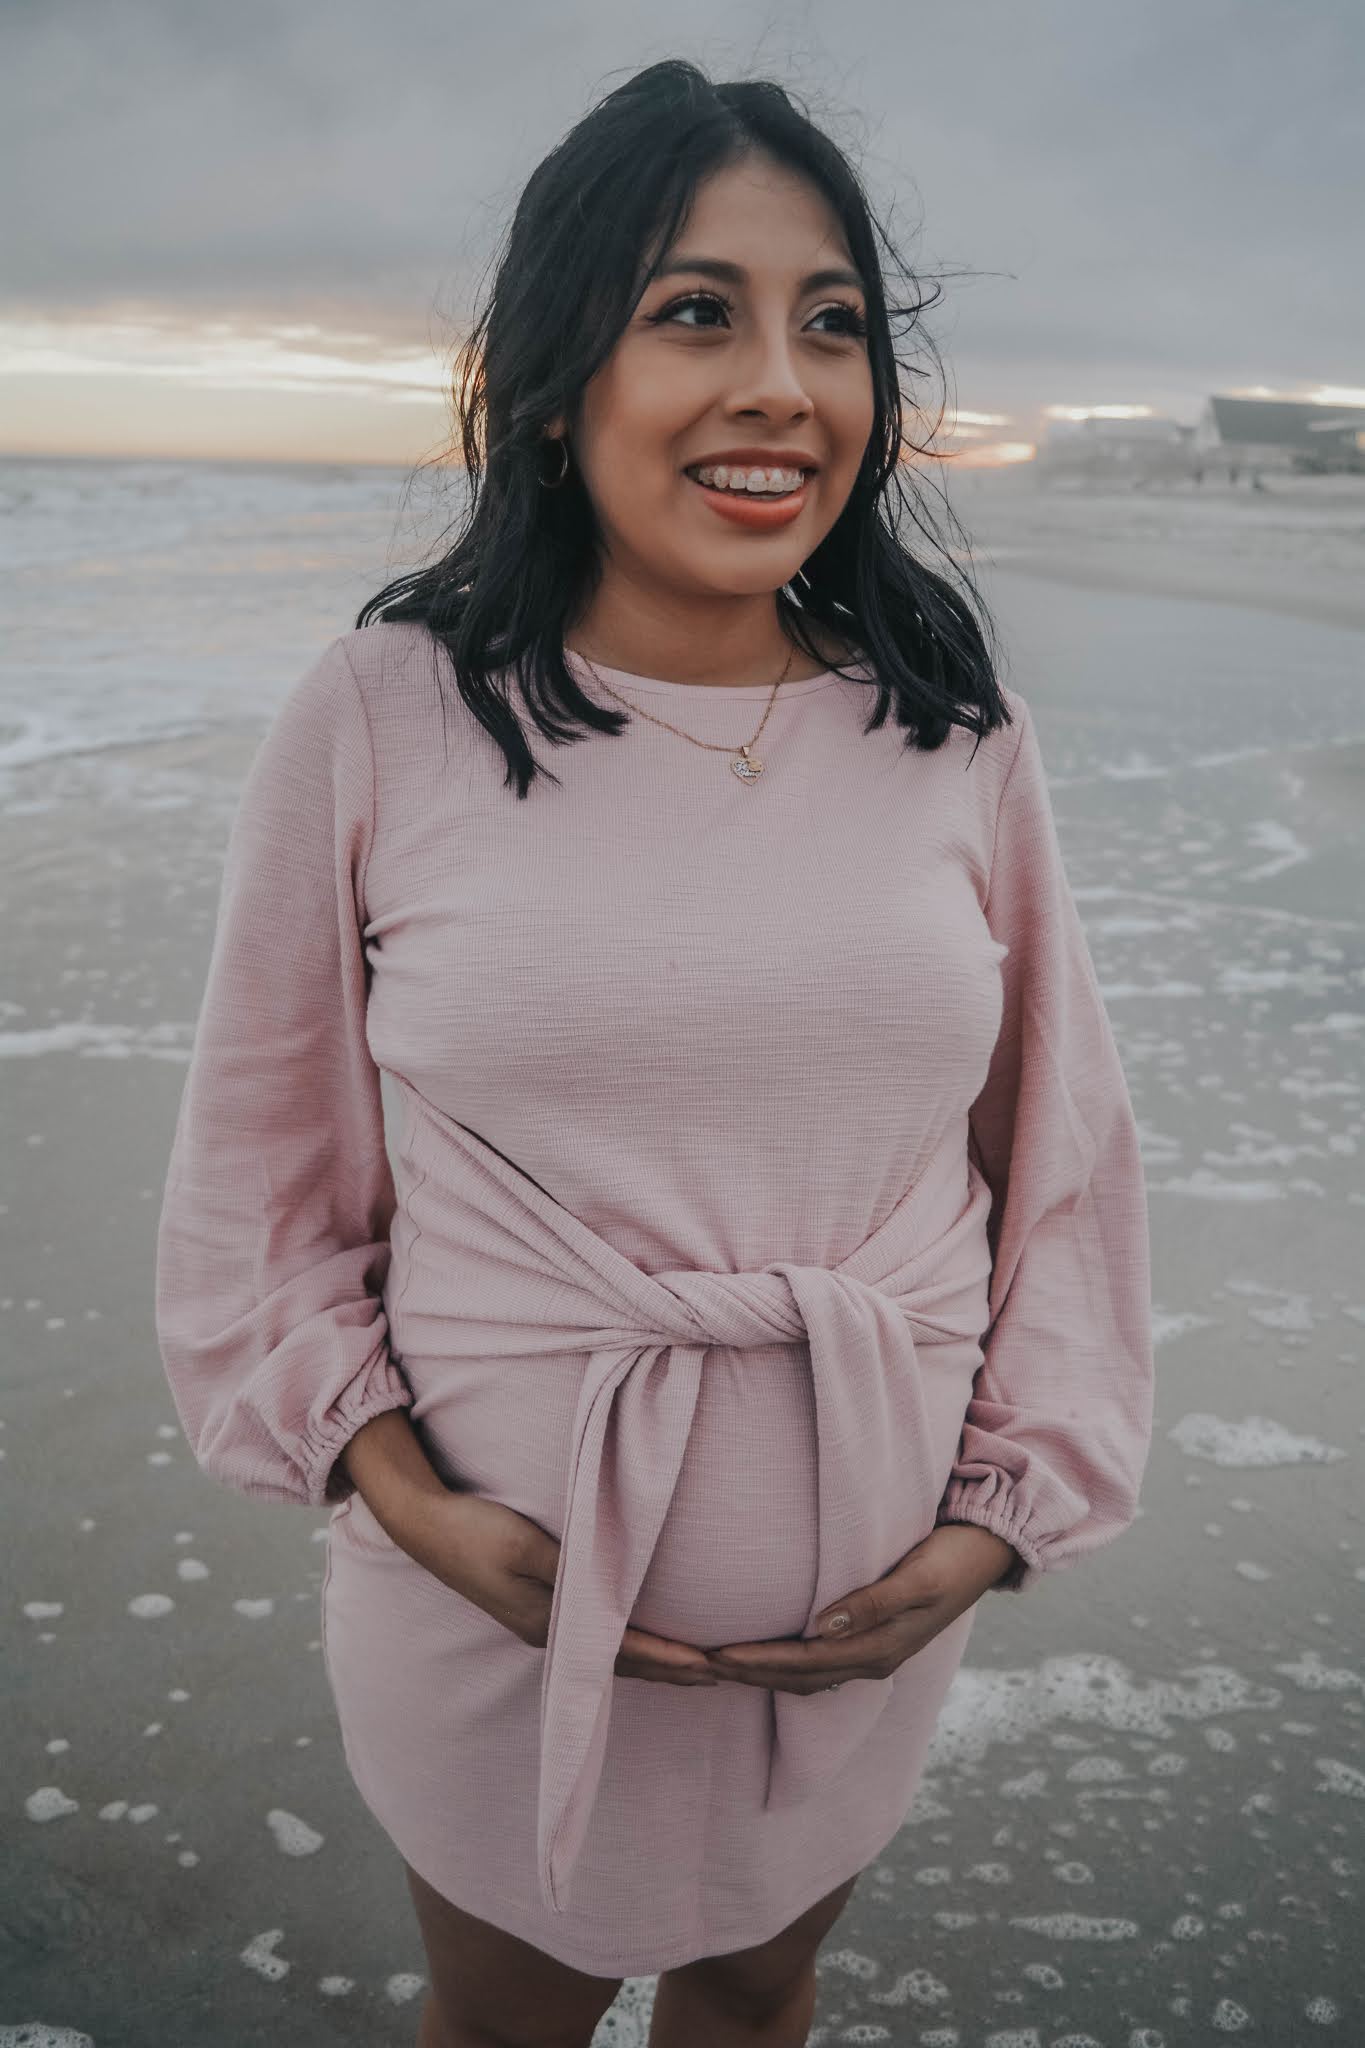 Maternity Photo Shoot Ideas: The Beach Sunset